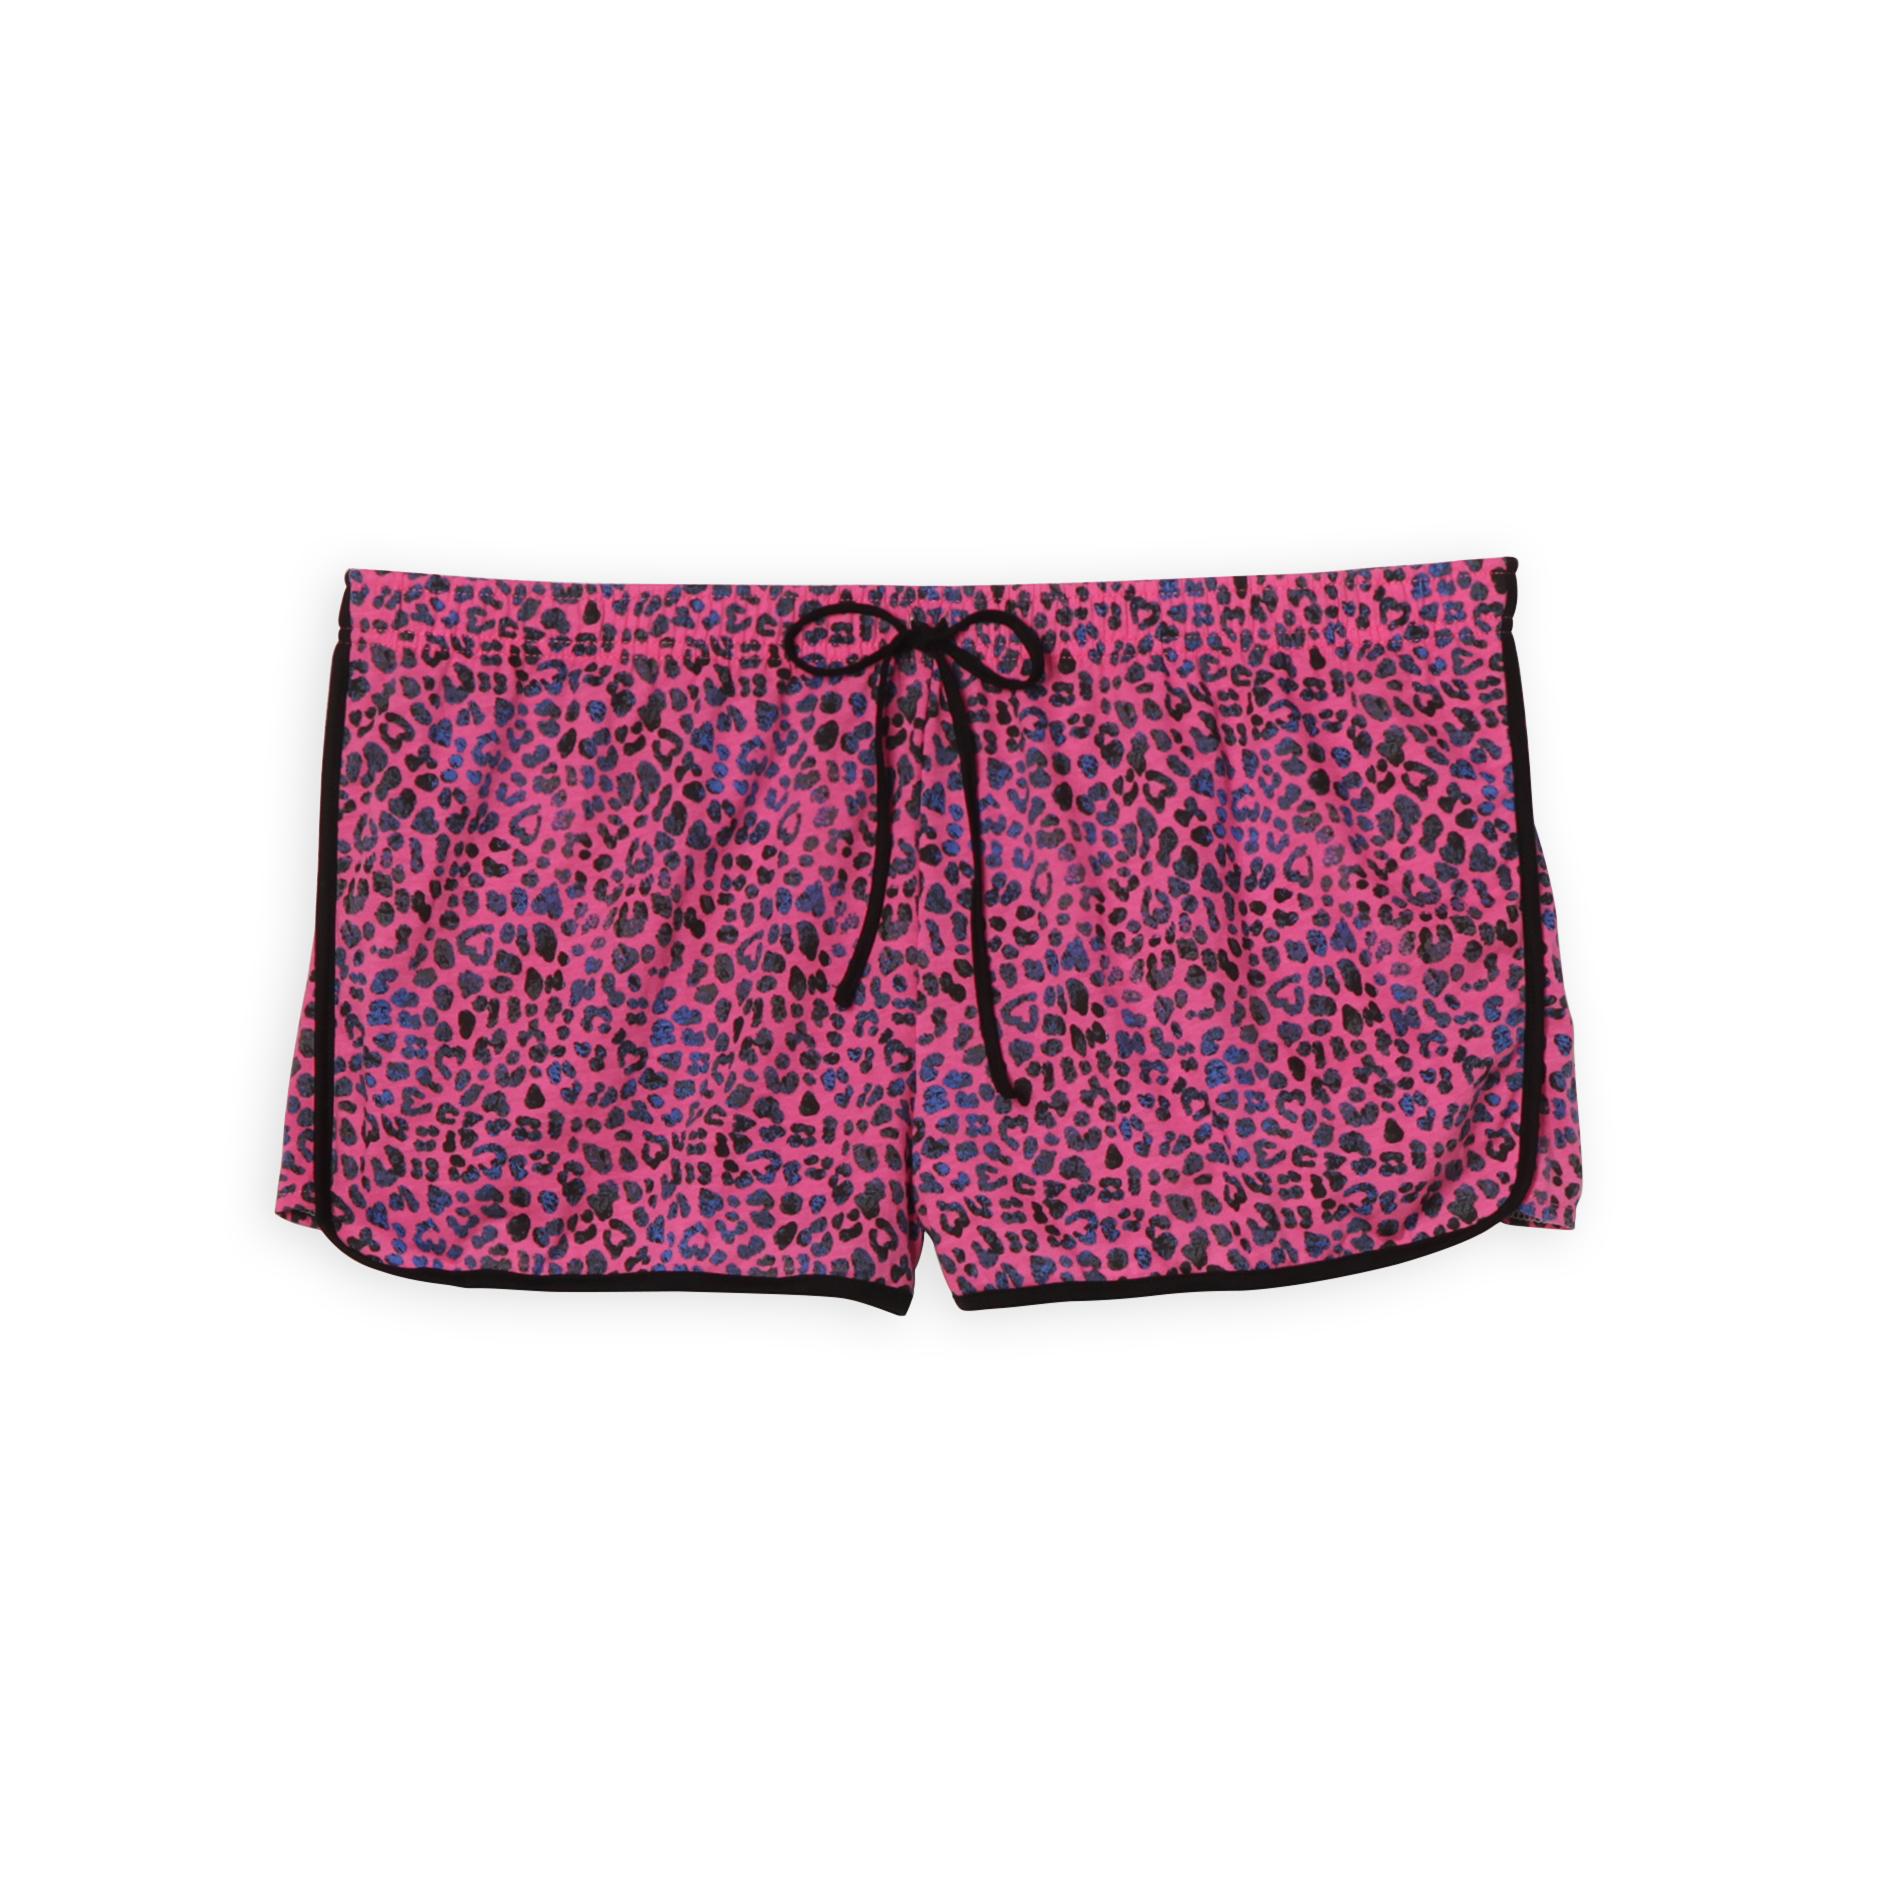 Joe Boxer Knit Dolphin Shorts - Leopard Print